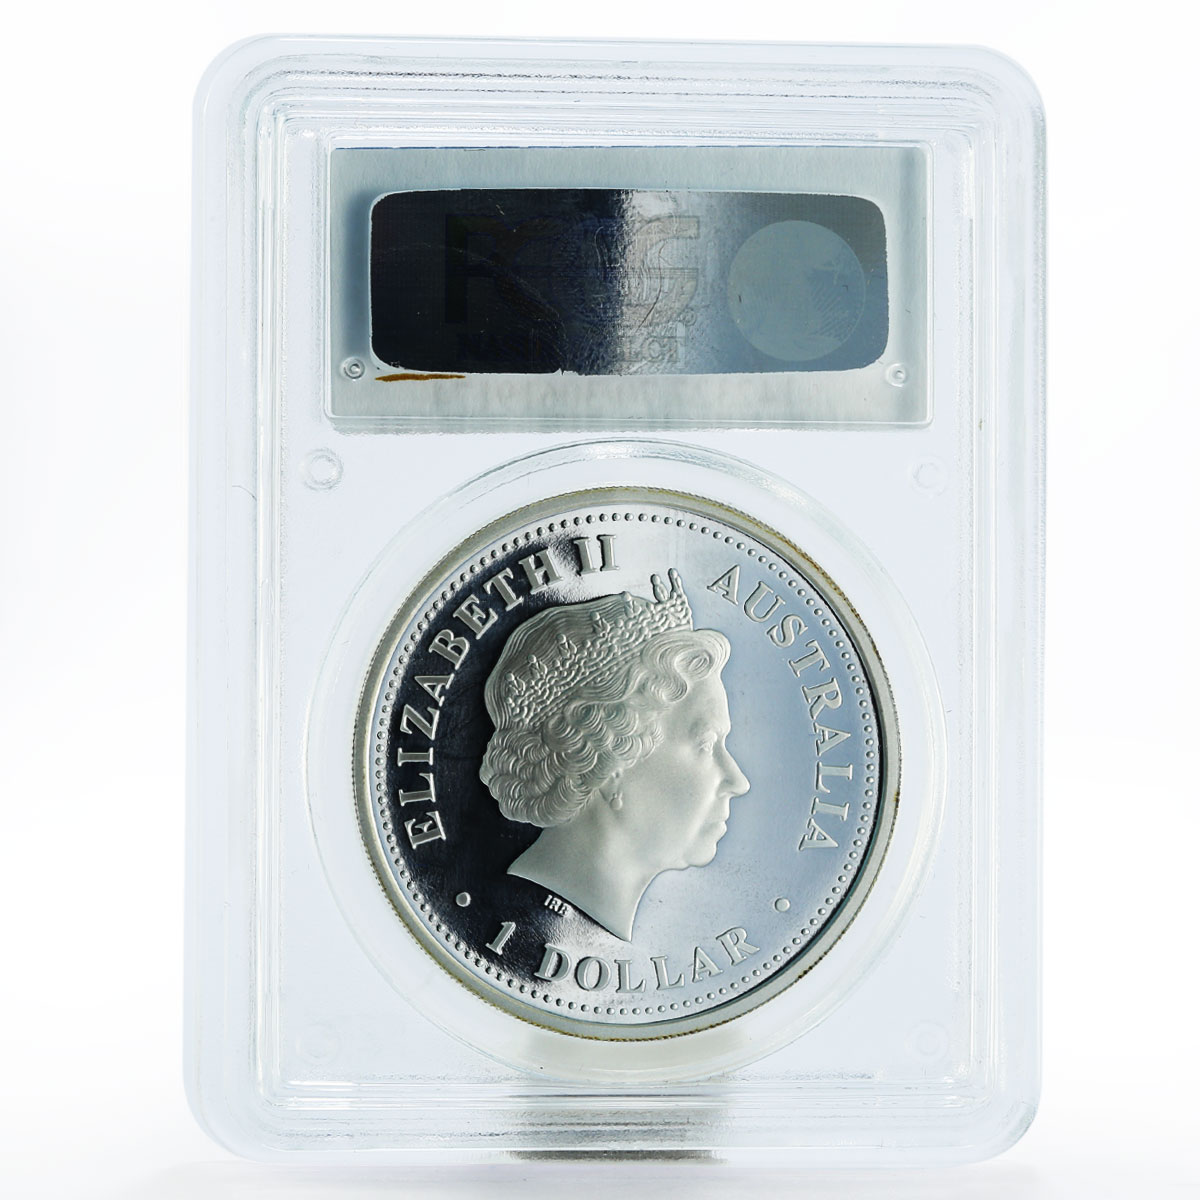 Australia 1 dollar Year of the Dog PR70 PCGS silver coin 2006